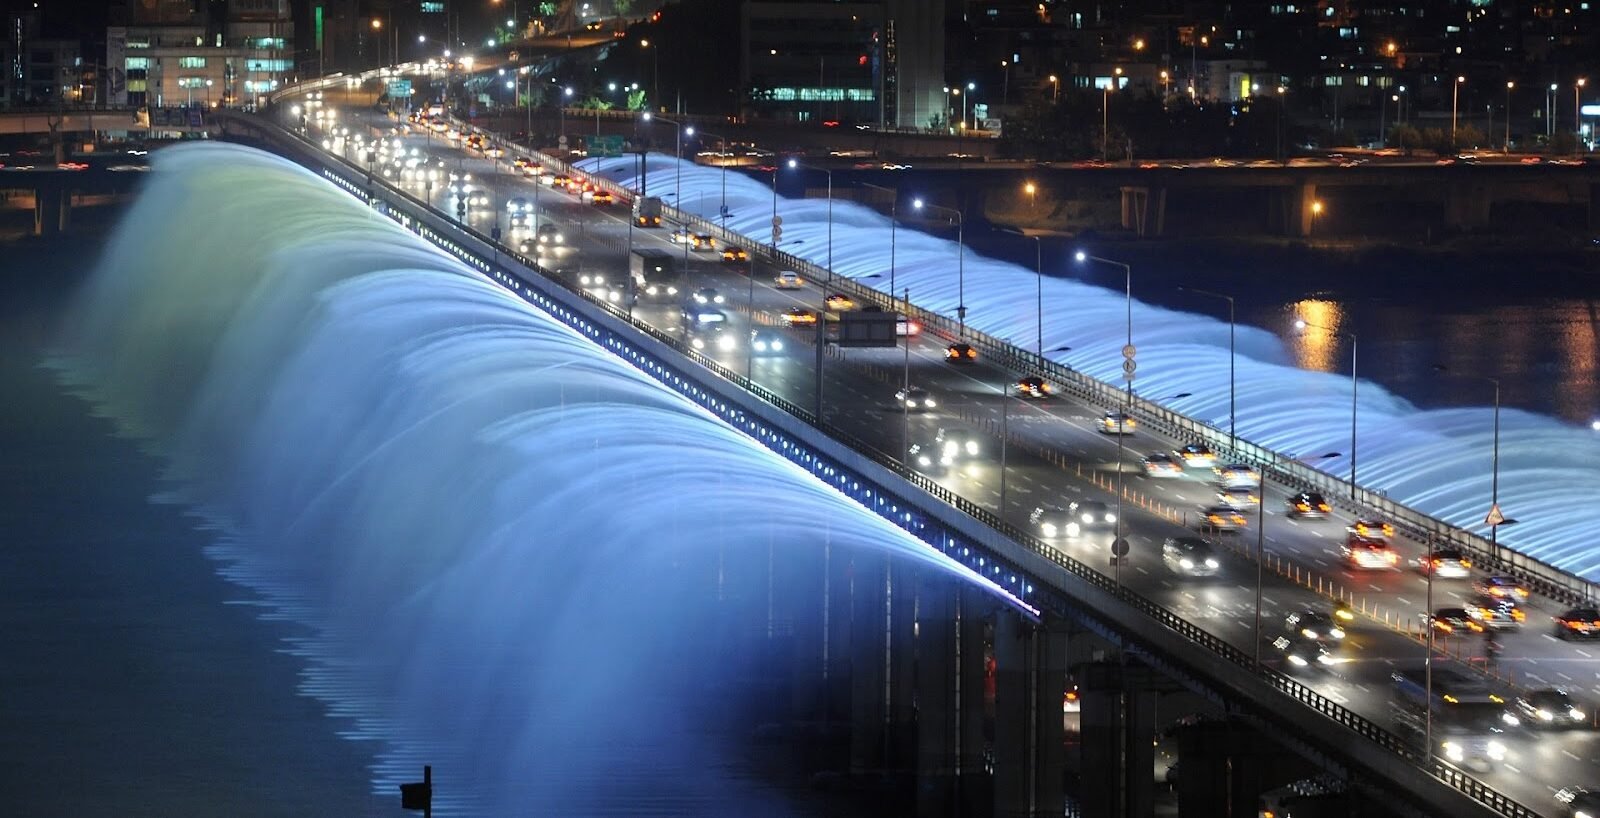 The Banpo Bridge in South Korea